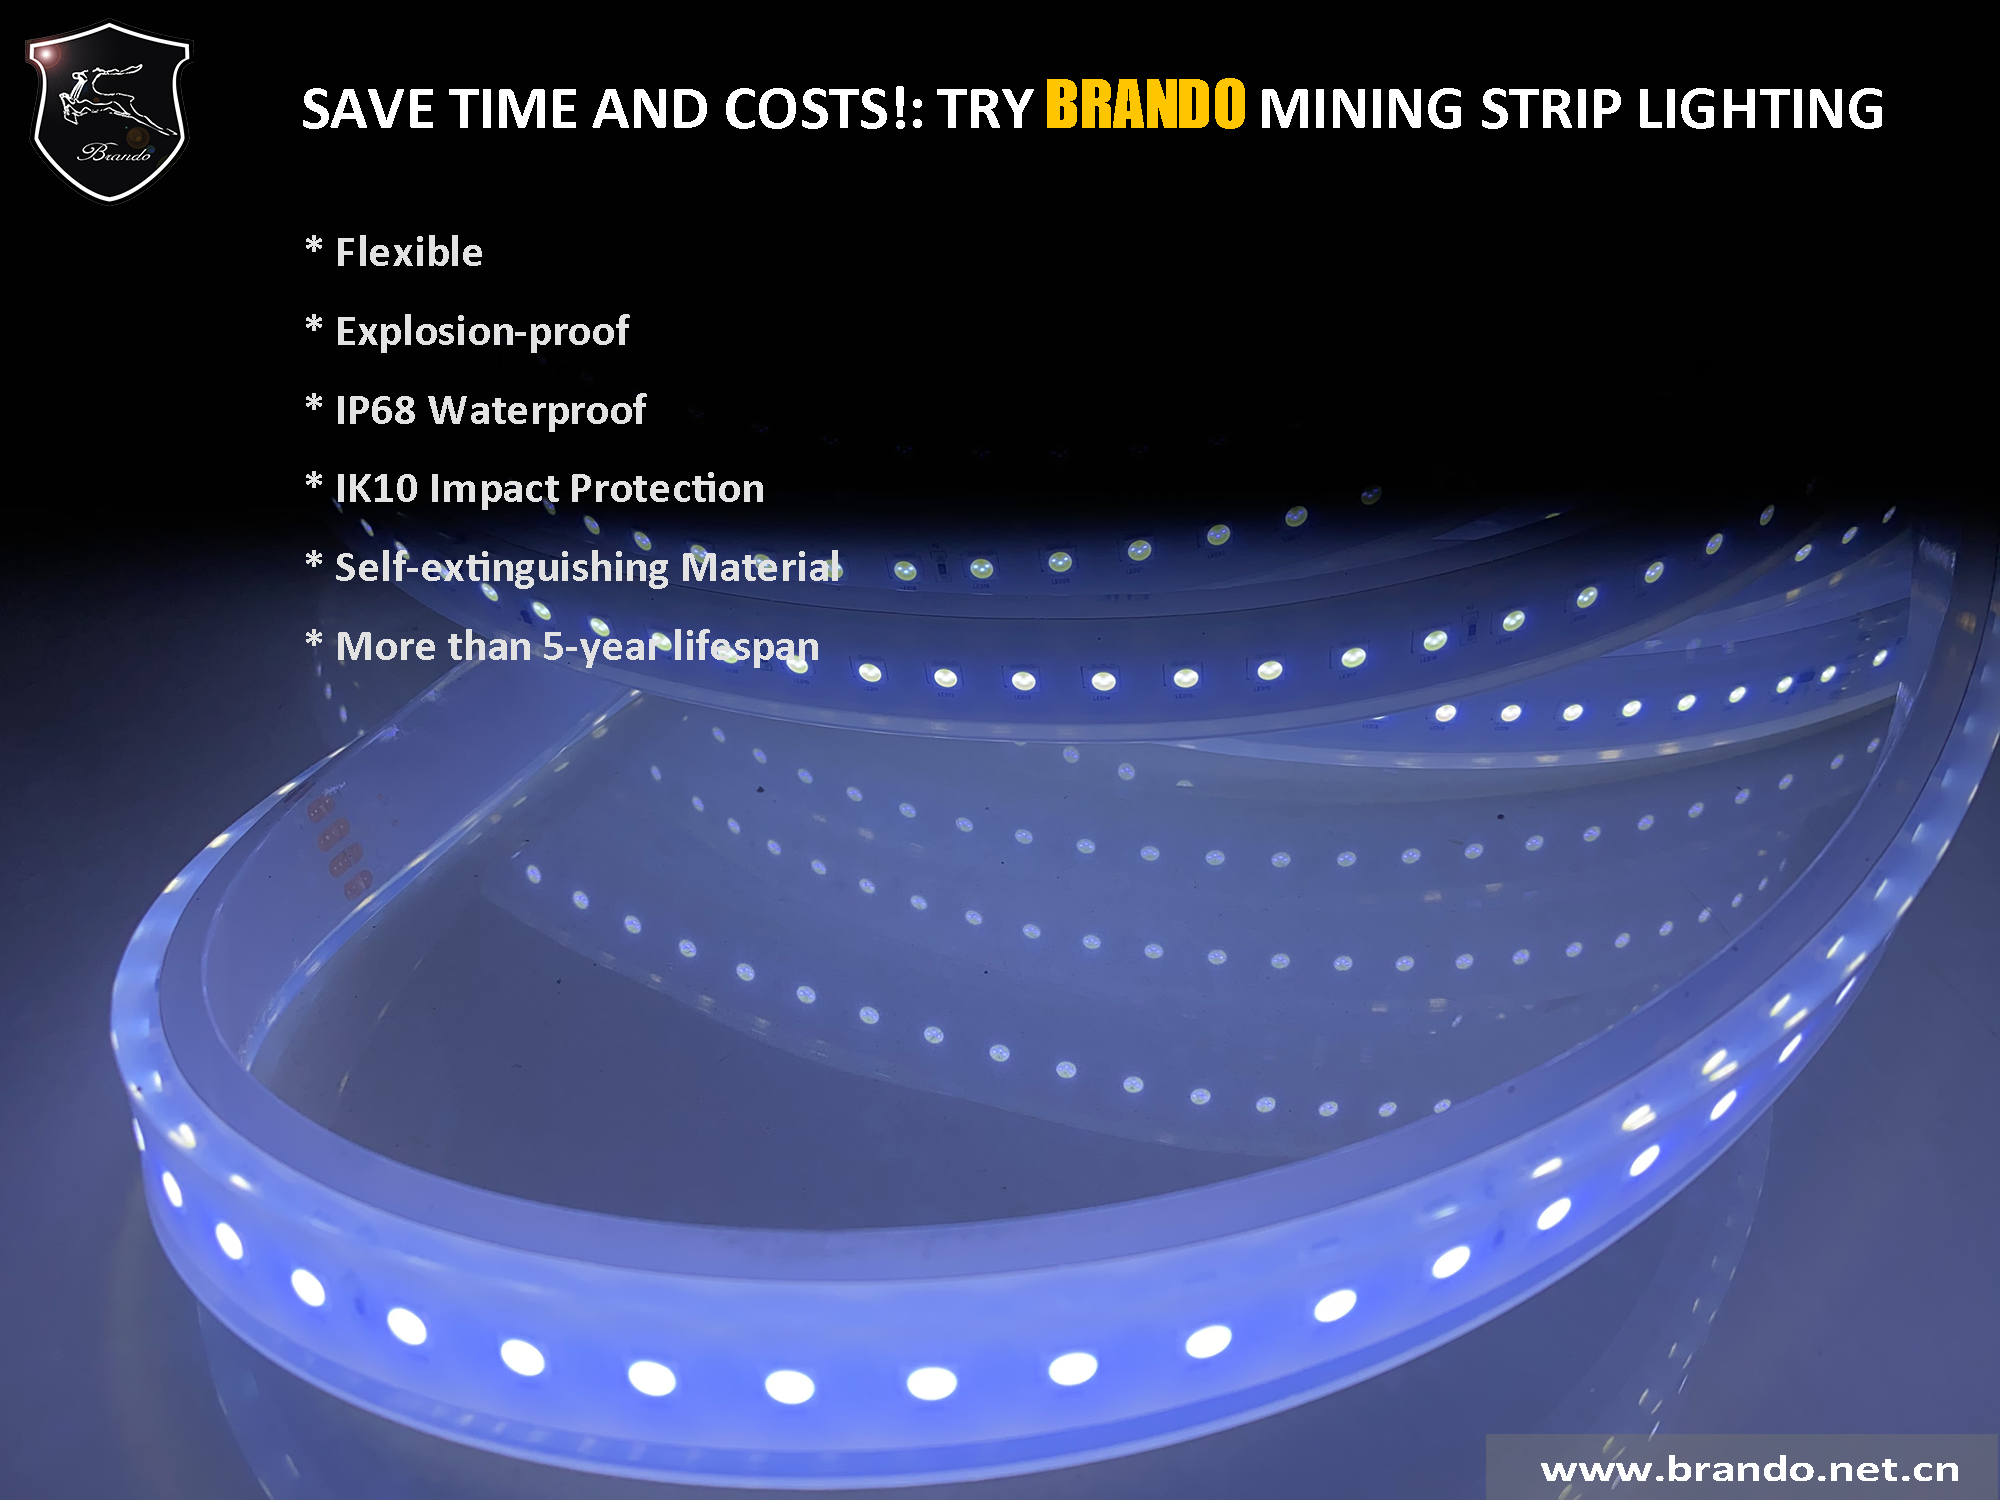 TRY BRANDO LED MINING STRIP LIGHTING